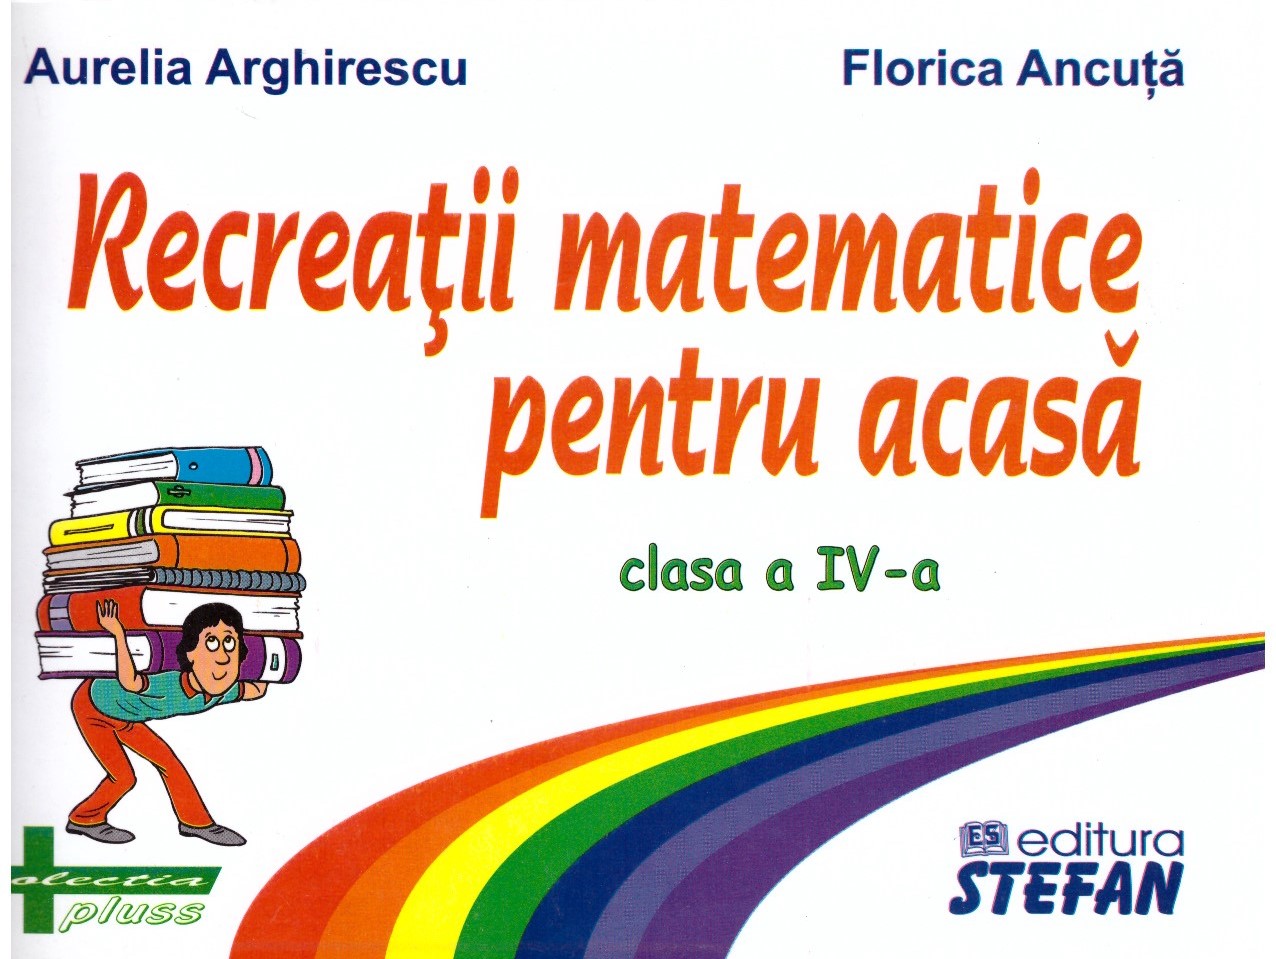 Recreatii matematice pentru acasa clasa a IV-a (Aurelia Arghirescu)